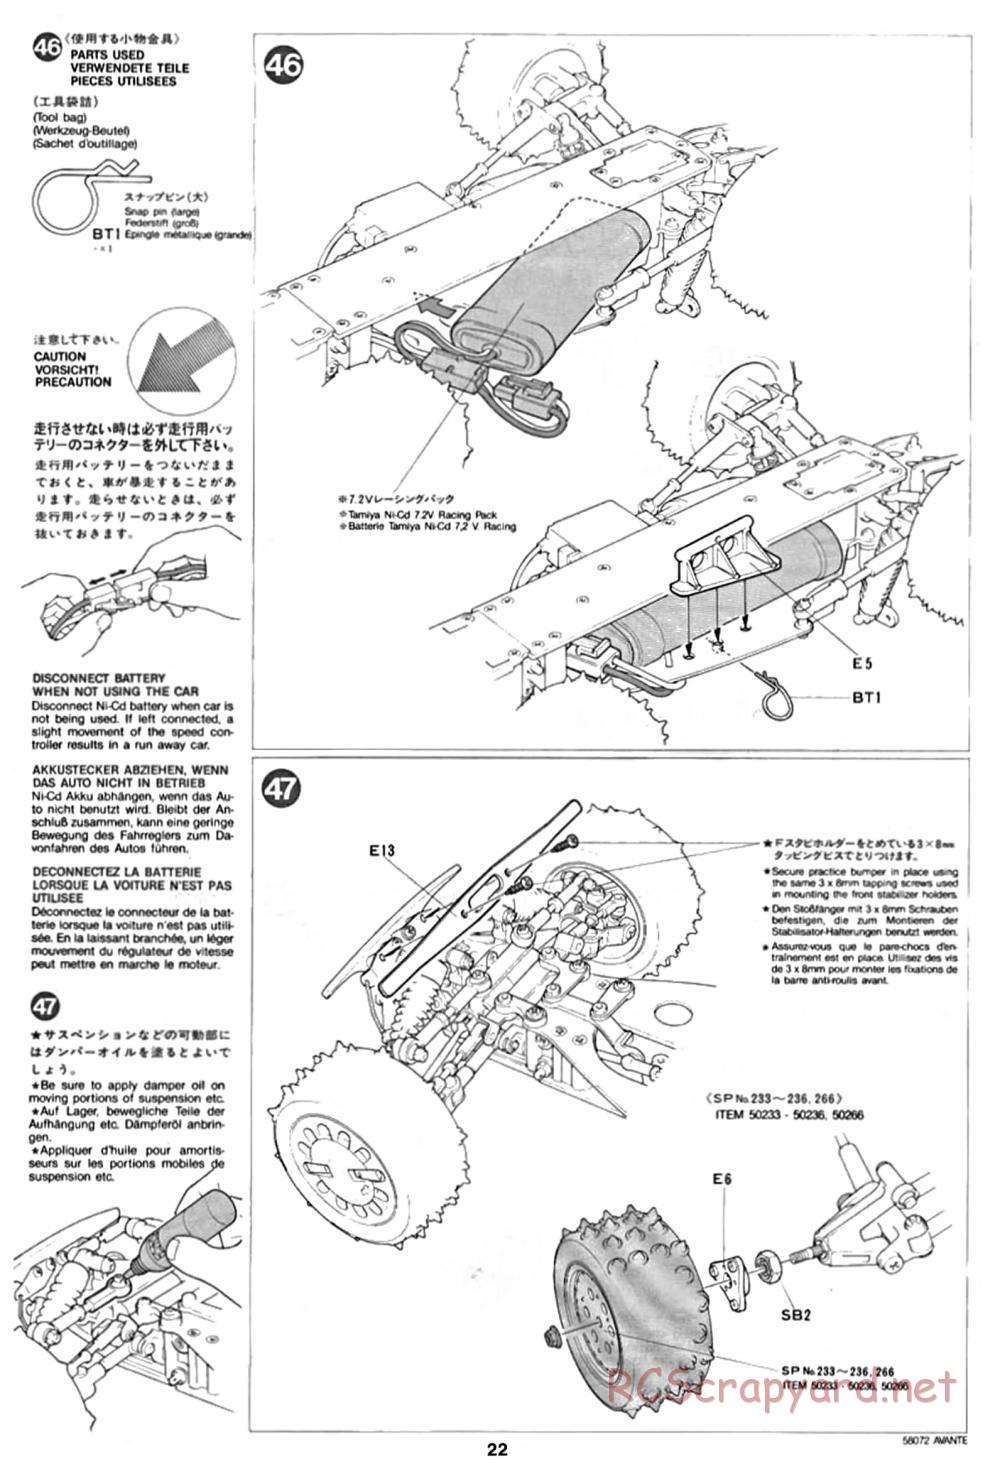 Tamiya - Avante - 58072 - Manual - Page 22